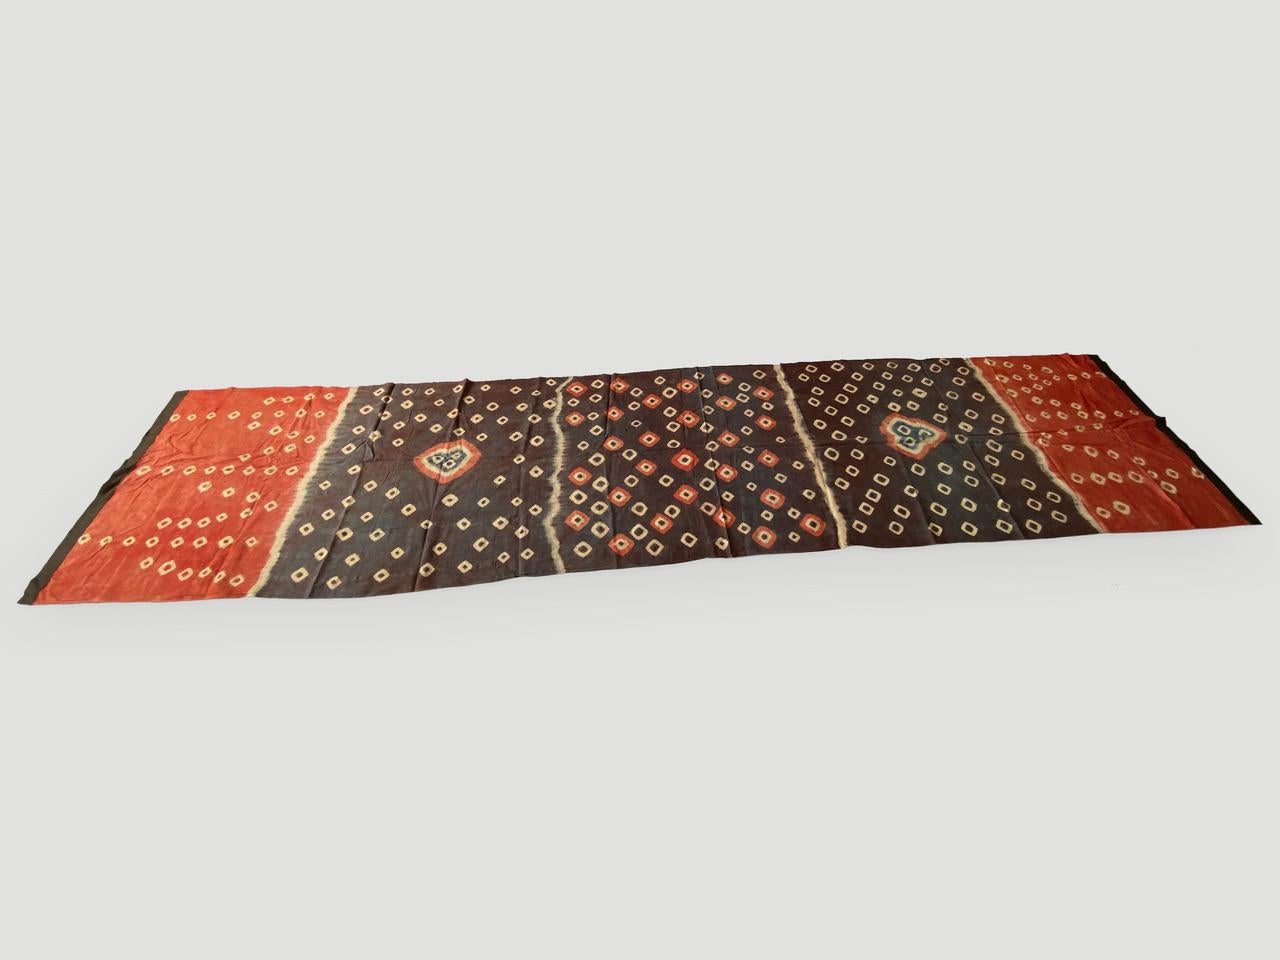 20ième siècle Andrianna Shamaris - Textile ancien en lin et coton de la terre de Toraja en vente